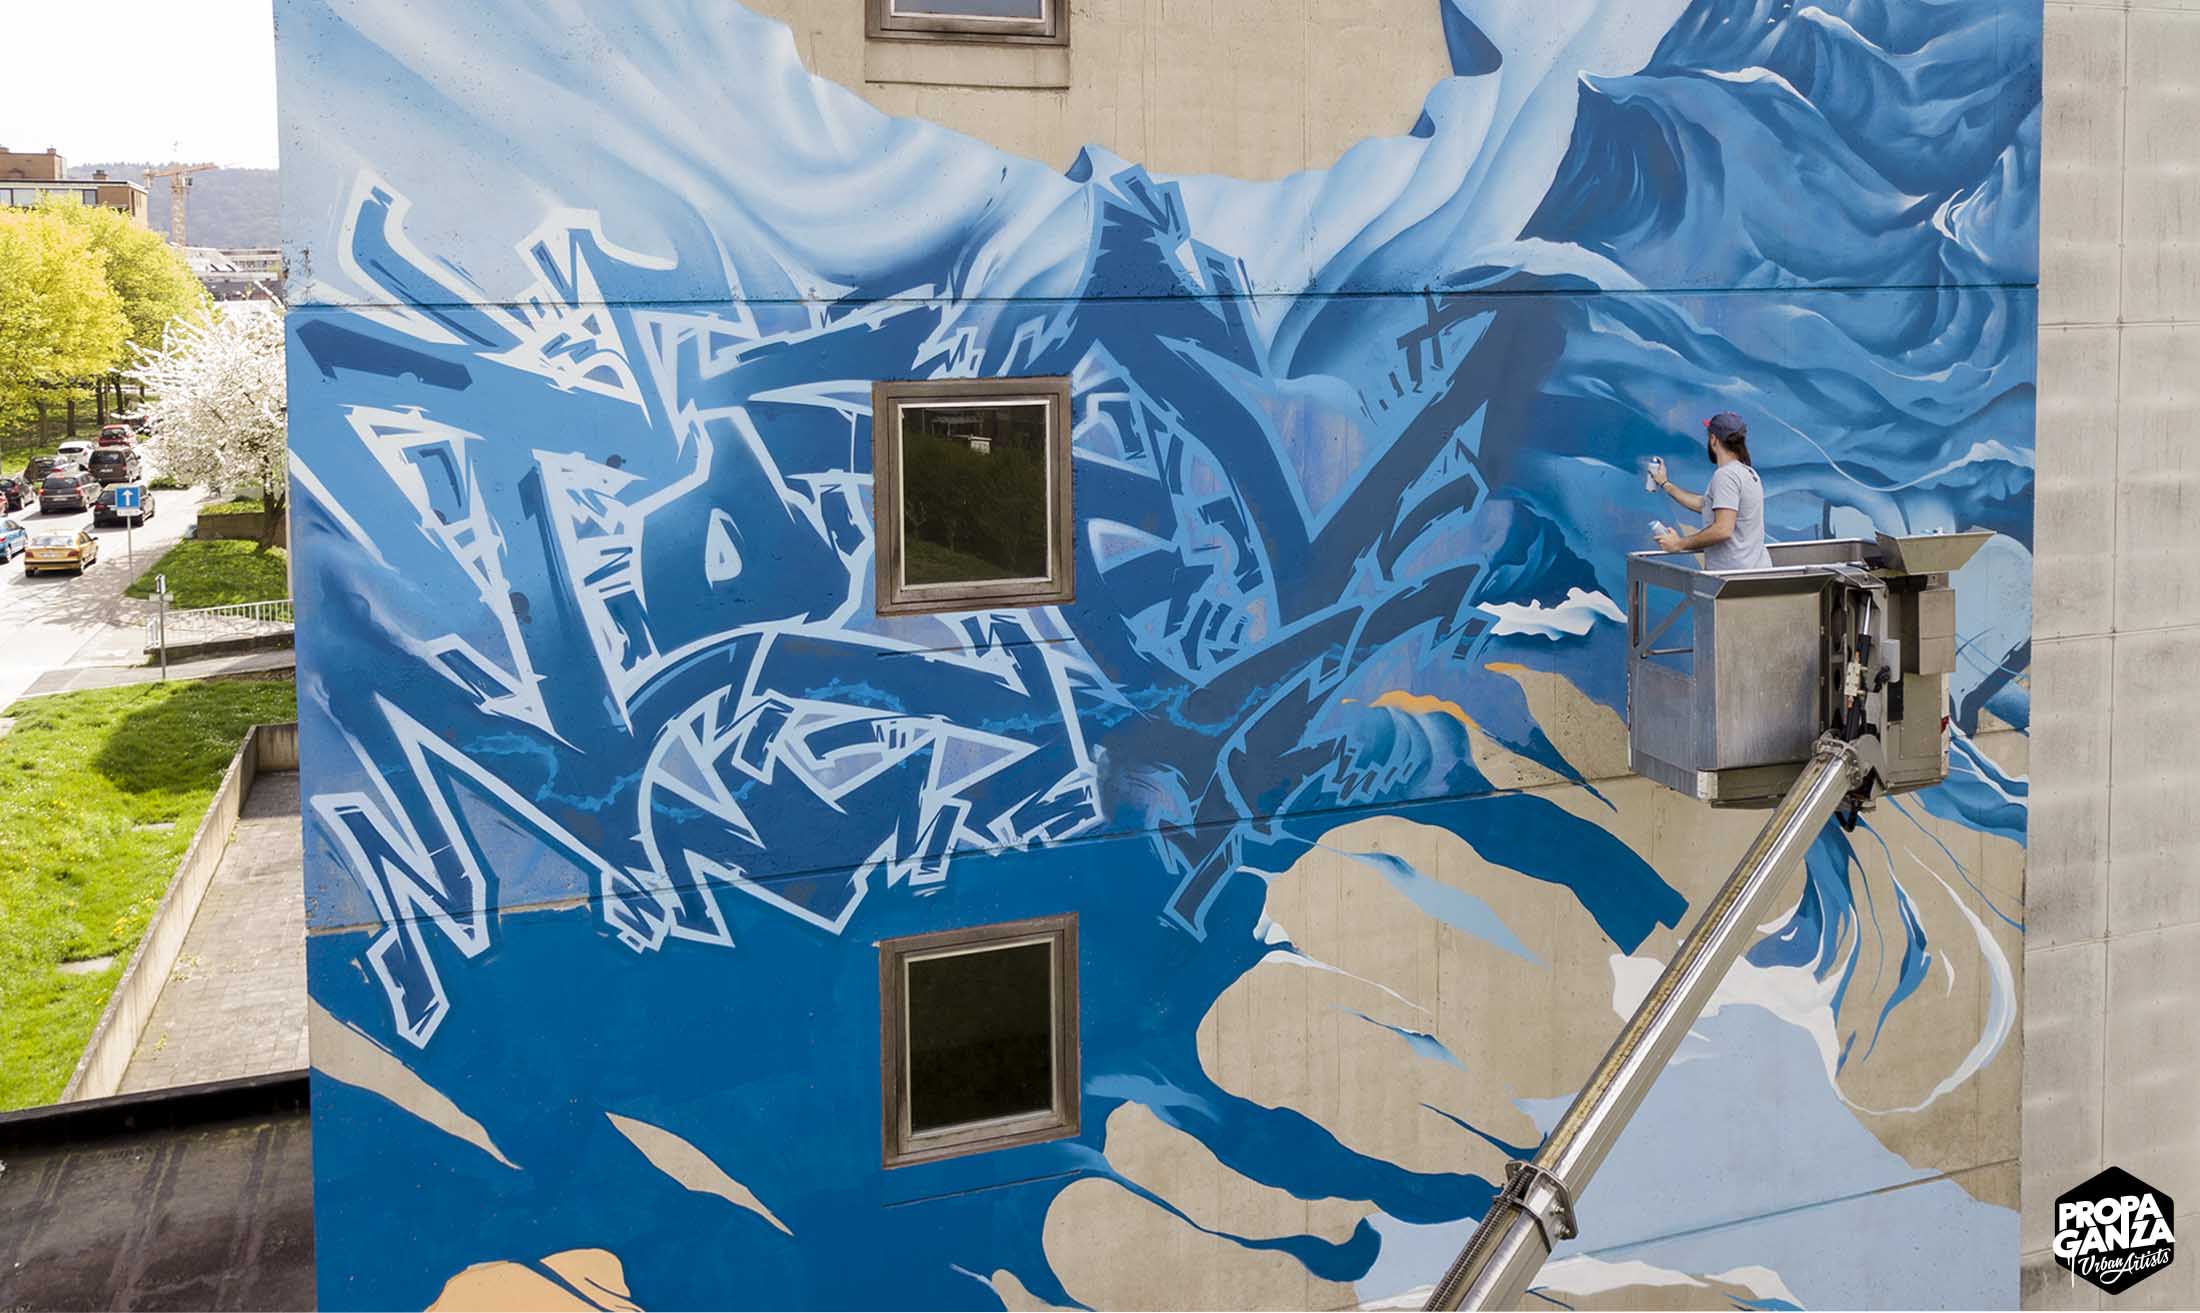 https://propaganza.be/nl/wp-content/uploads/sites/3/2016/05/propaganza-begium-brussels-namur-artist-graffiti-street-art-spray-painting-roubens-trevor-2018-2.jpg